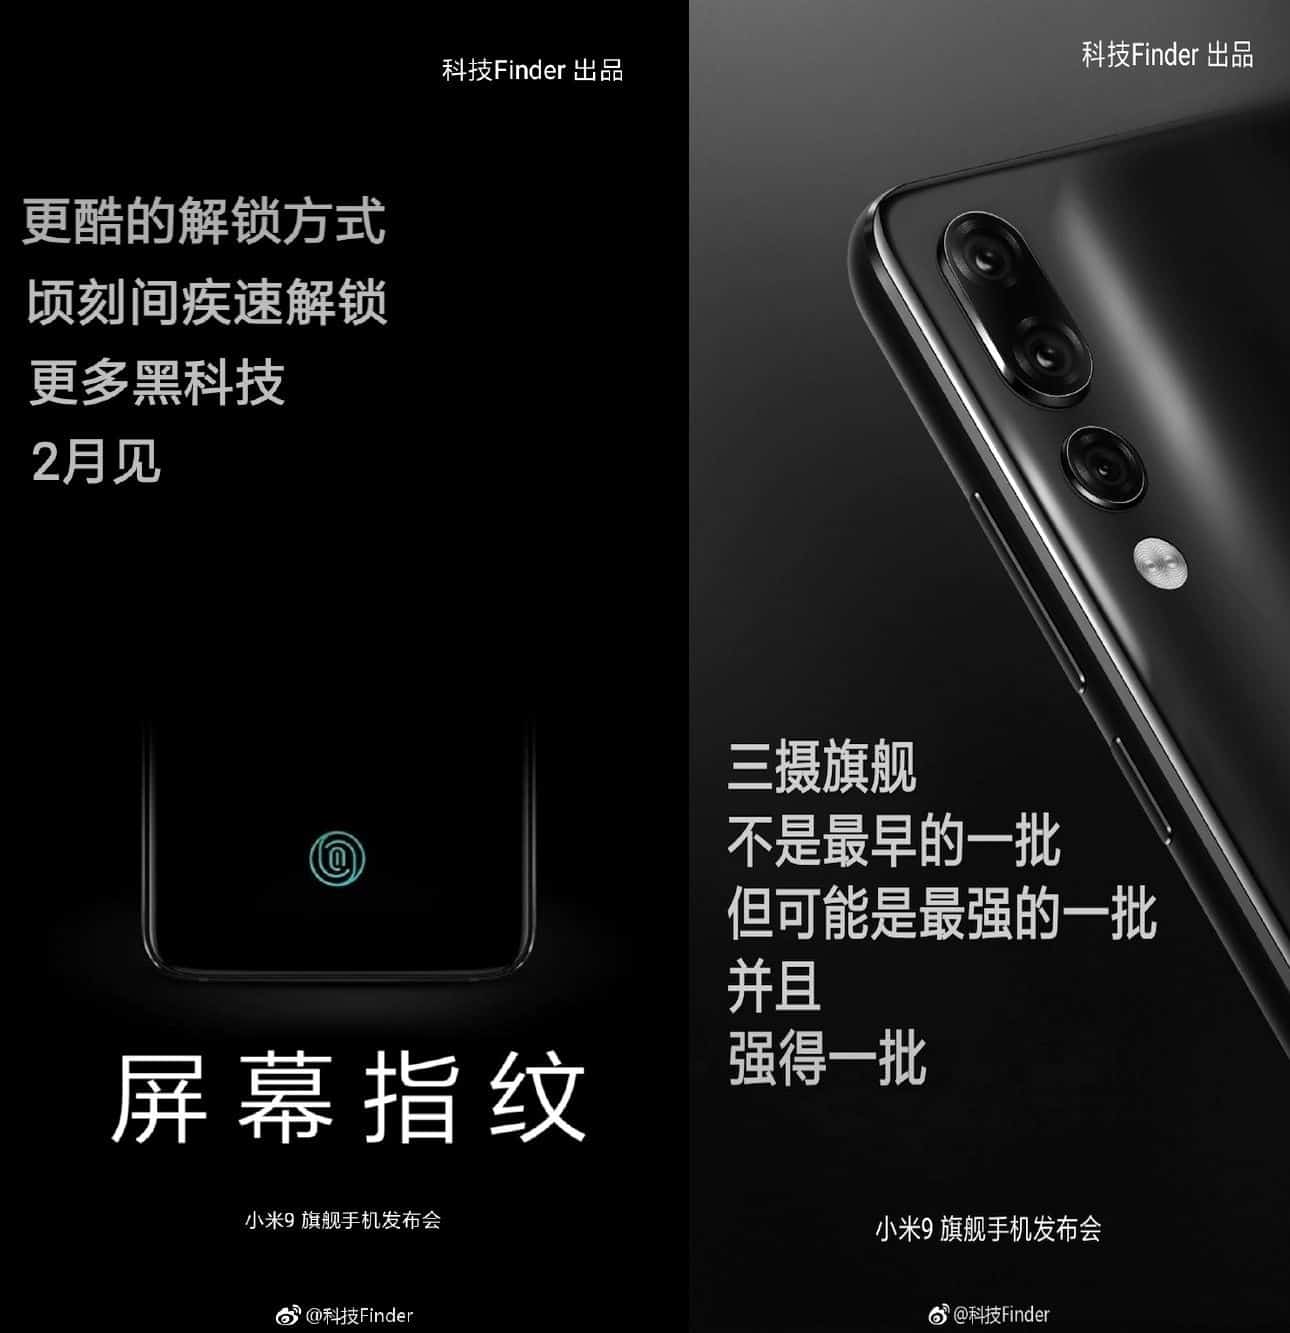 Xiaomi mi 9 february release rumor said